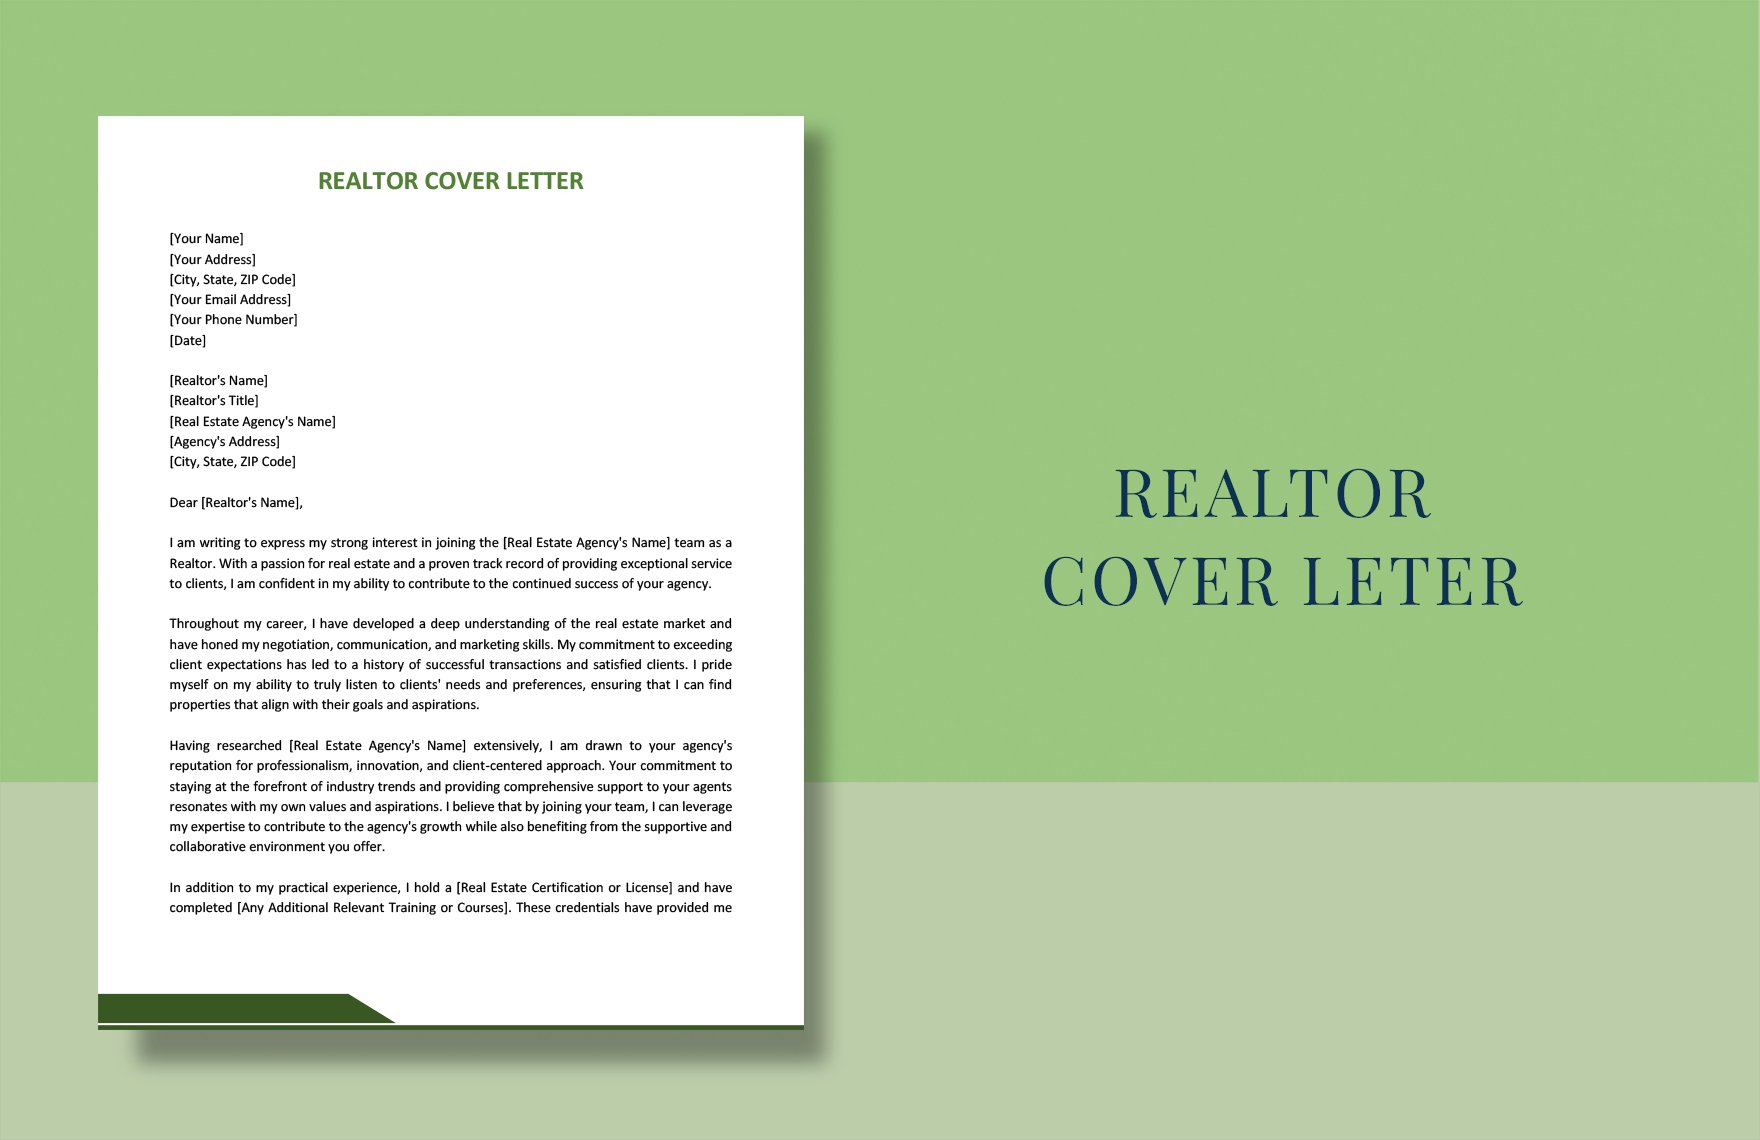 Realtor Cover Letter in Word, Google Docs, PDF